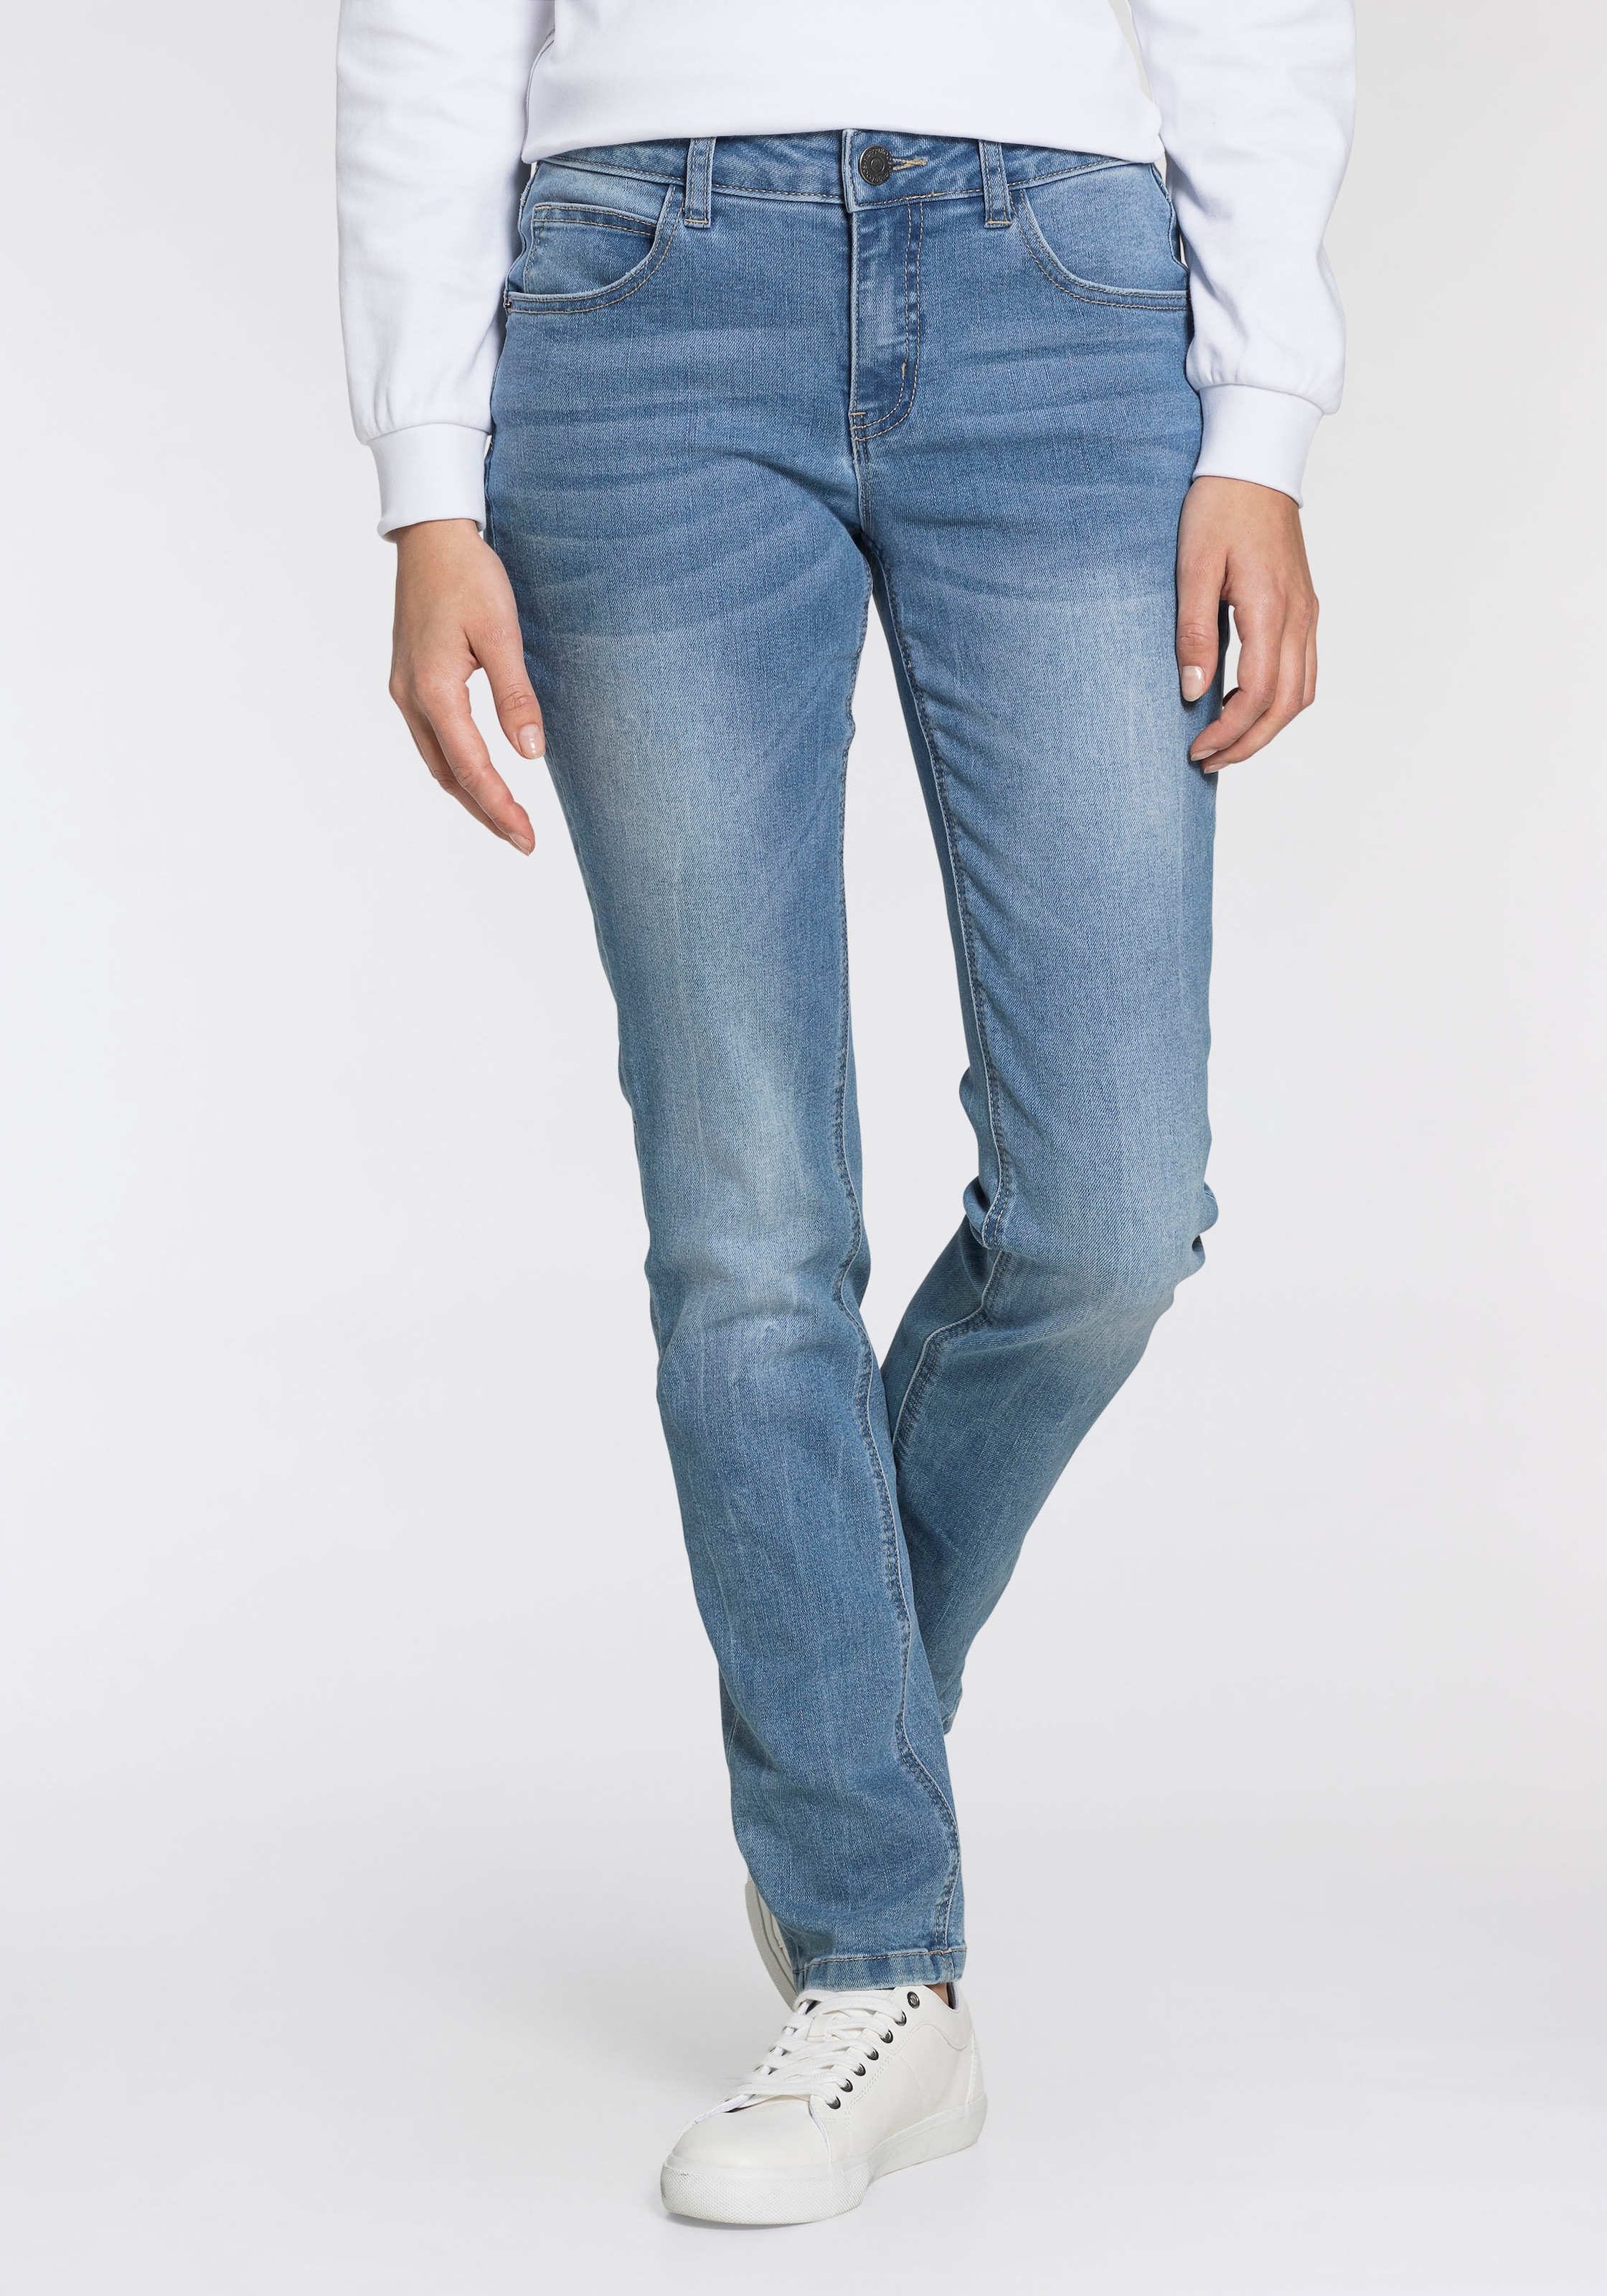 Trendige KangaROOS jetzt kaufen ♕ Jeans online